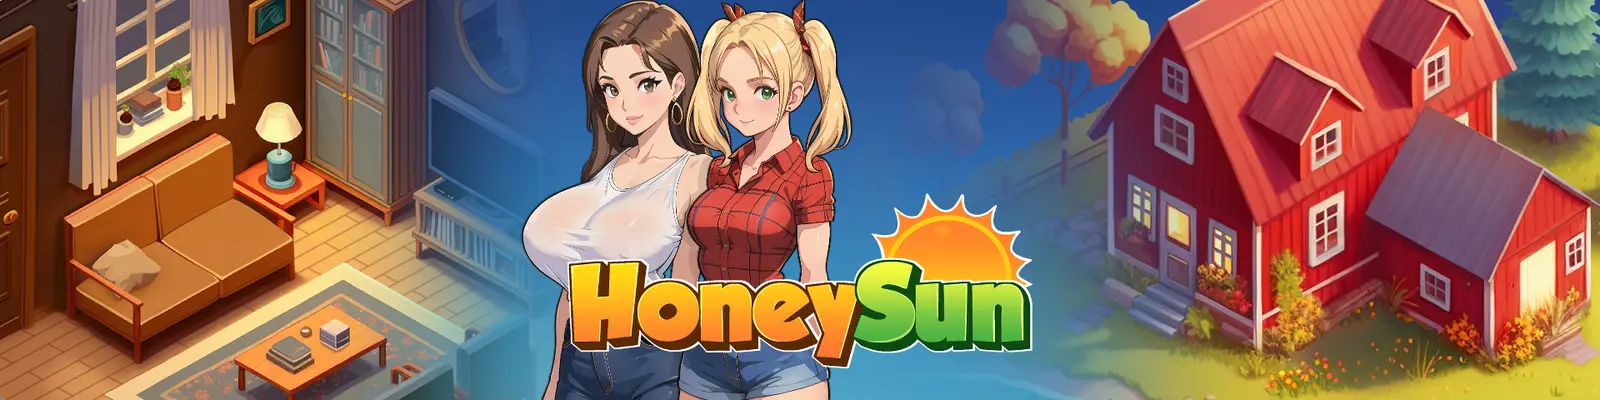 HoneySun: Amelia main image